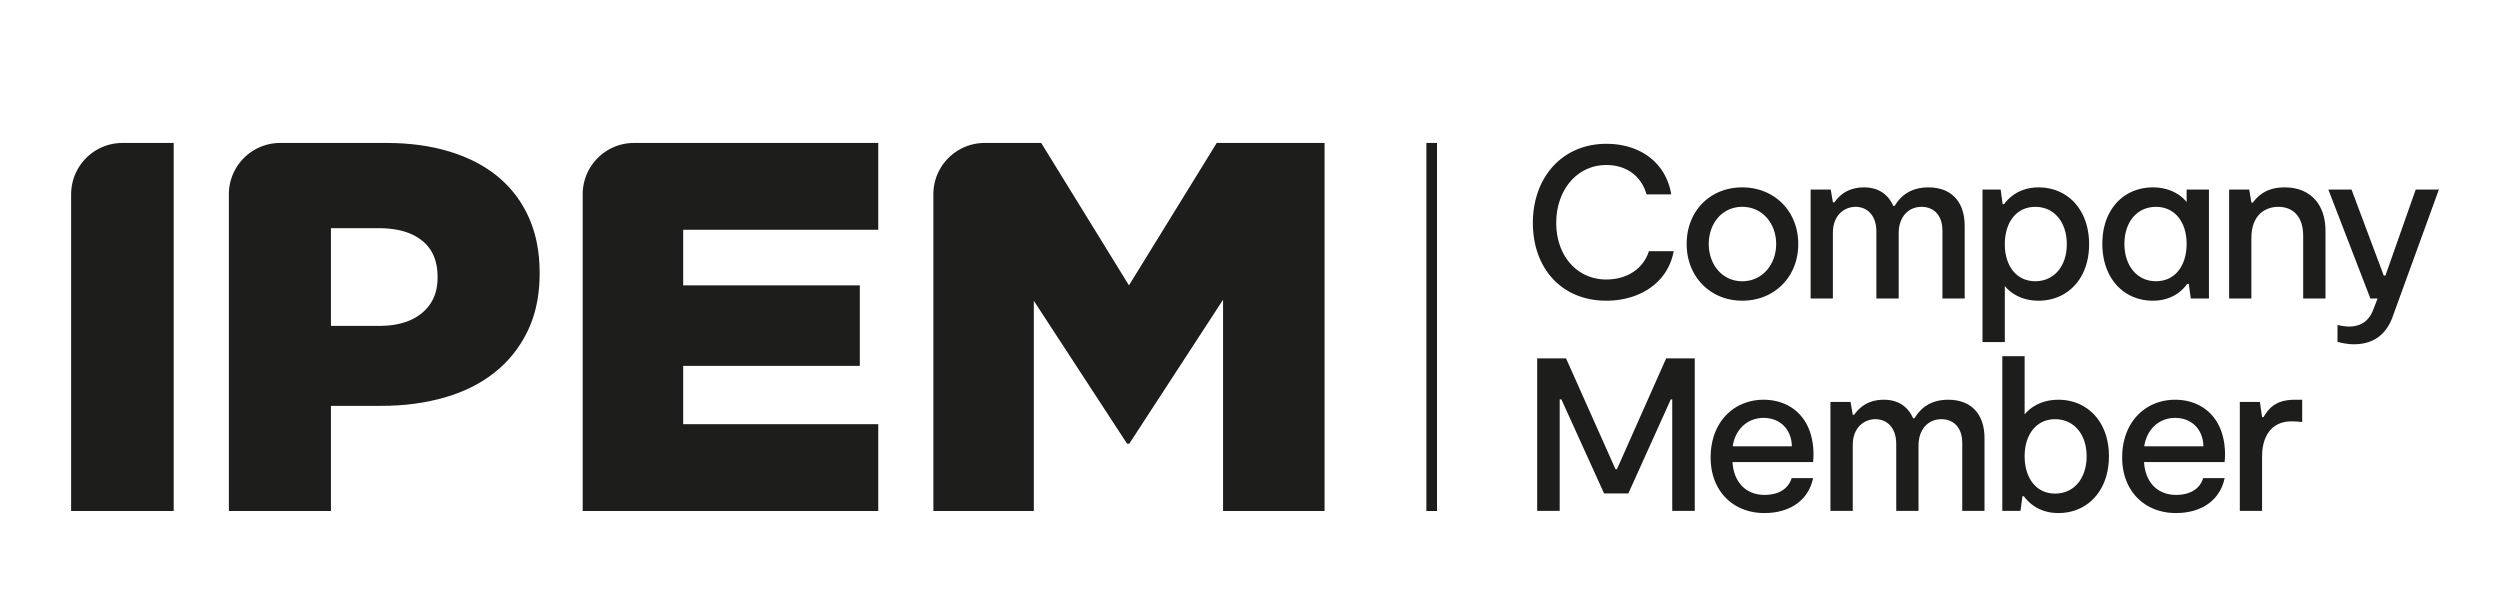 IPEM_Company_Member_Logo_Black